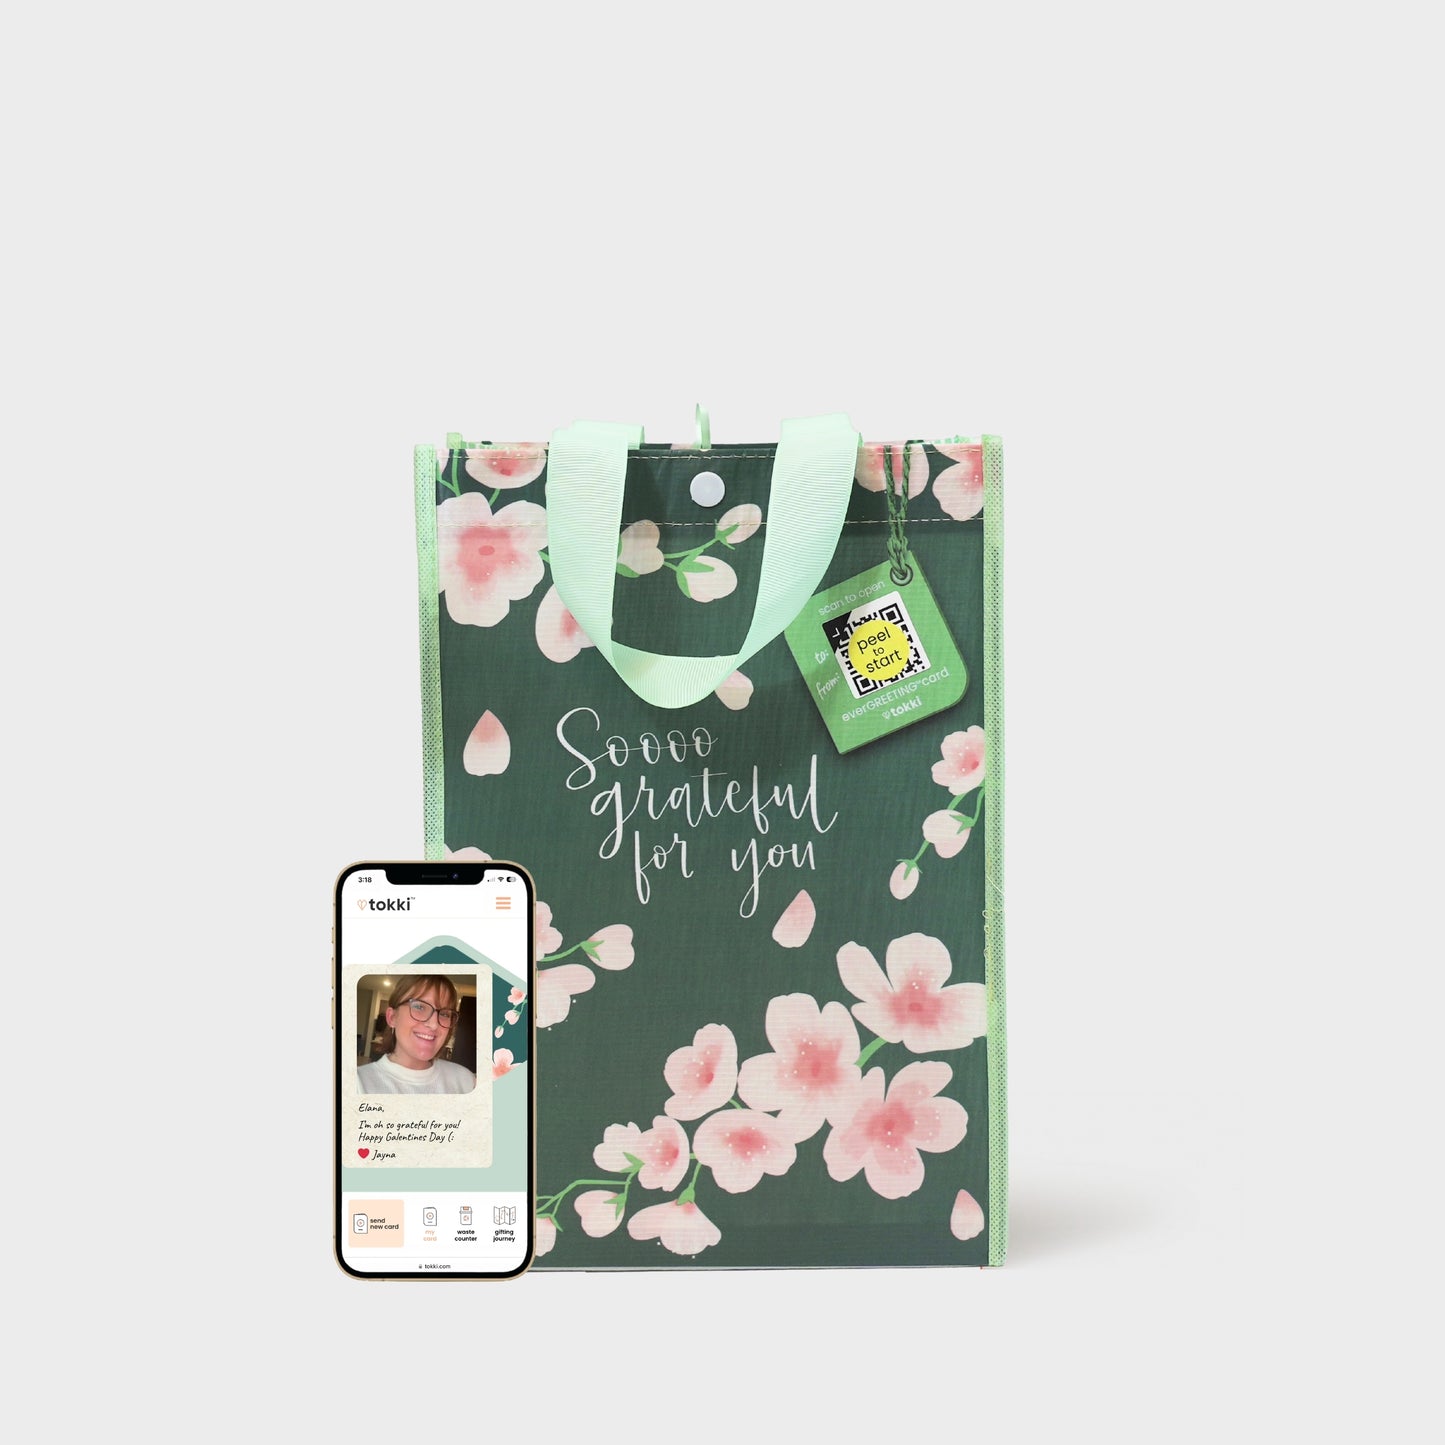 Girlfriend Bundle | Reusable Gift Bag + QR Greeting Card | 8 Pieces